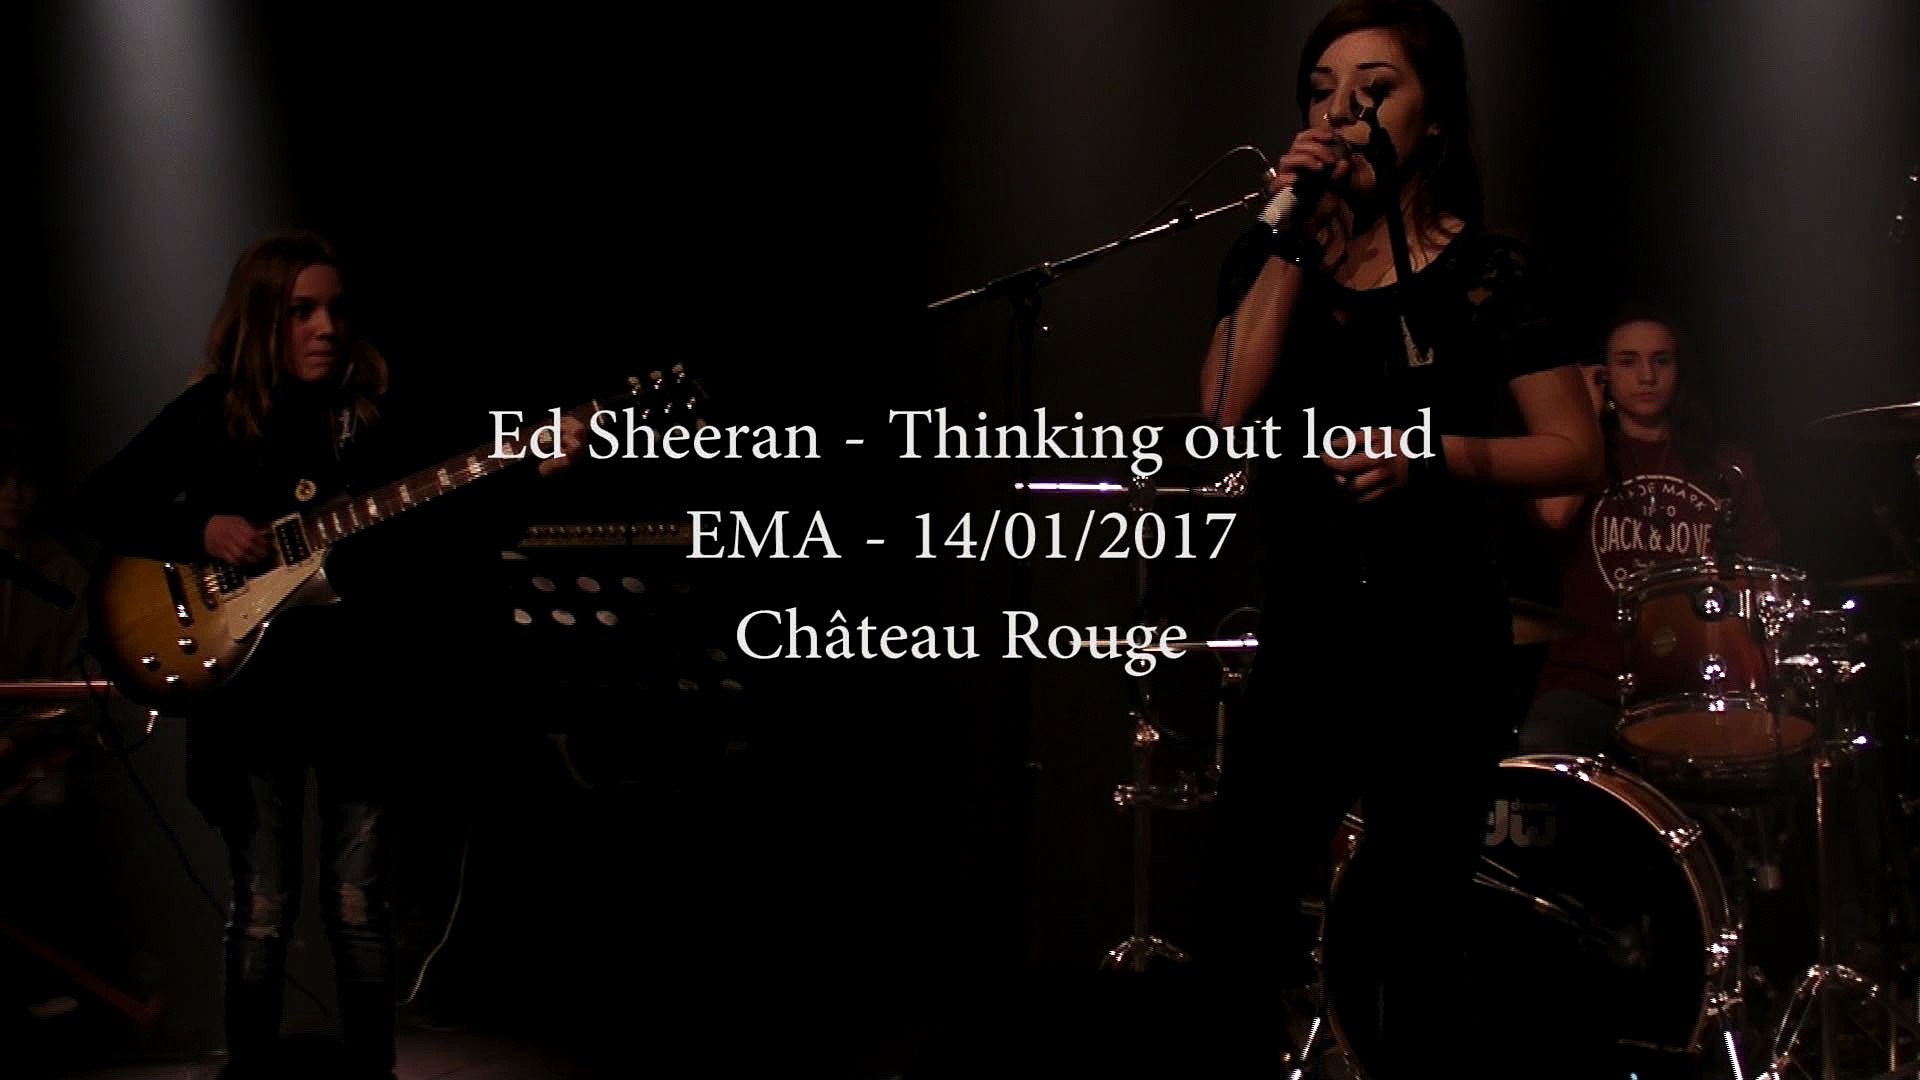 Concert EMA - 14/01/2017 - Ed Sheeran, Thinking out loud